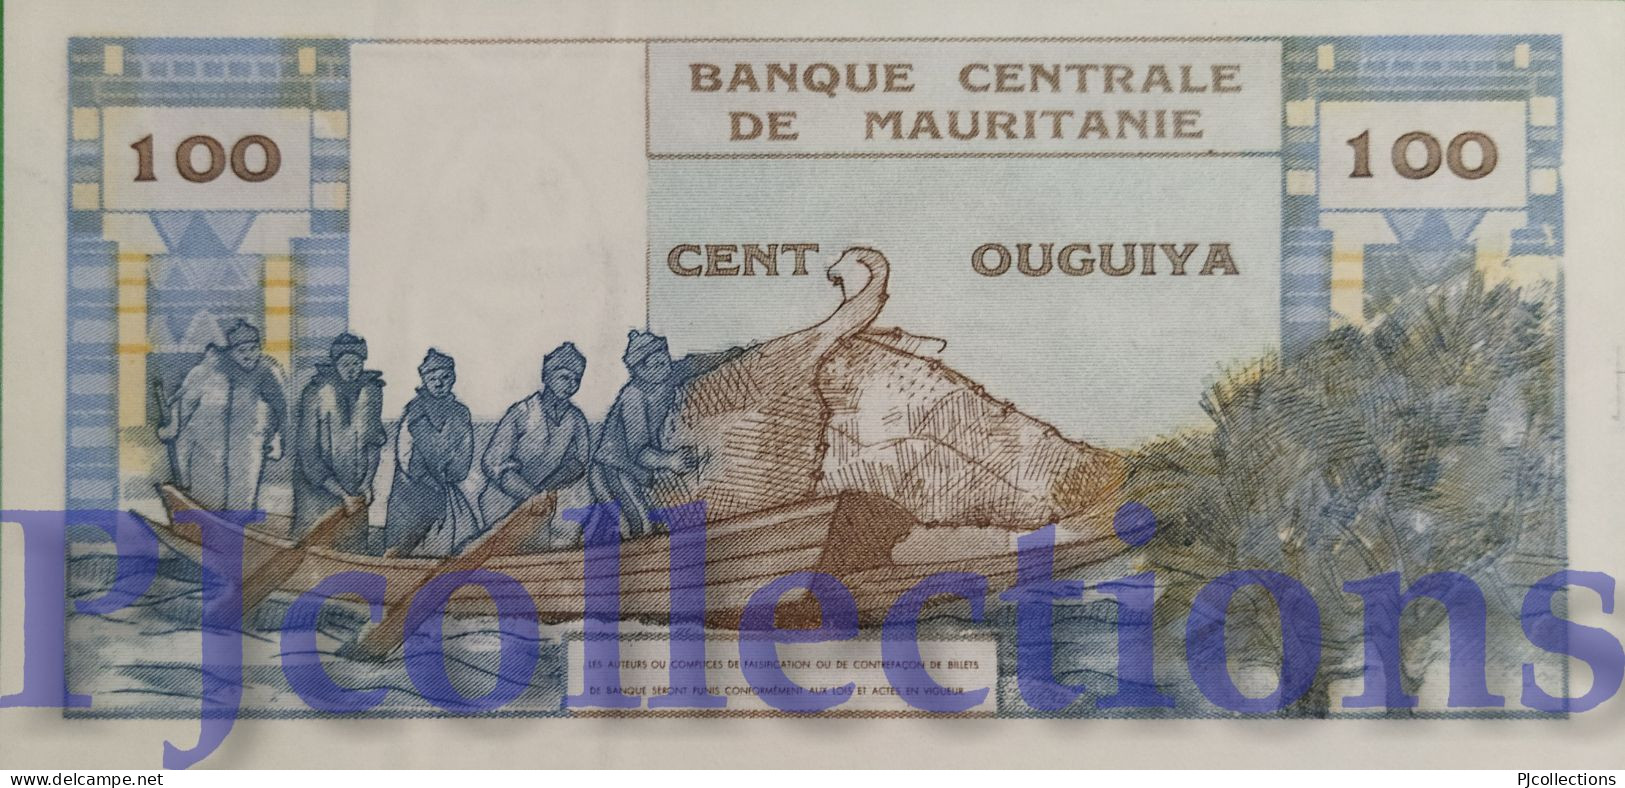 MAURITANIA 100 OUGUIYA 1973 PICK 1a UNC - Mauritanie